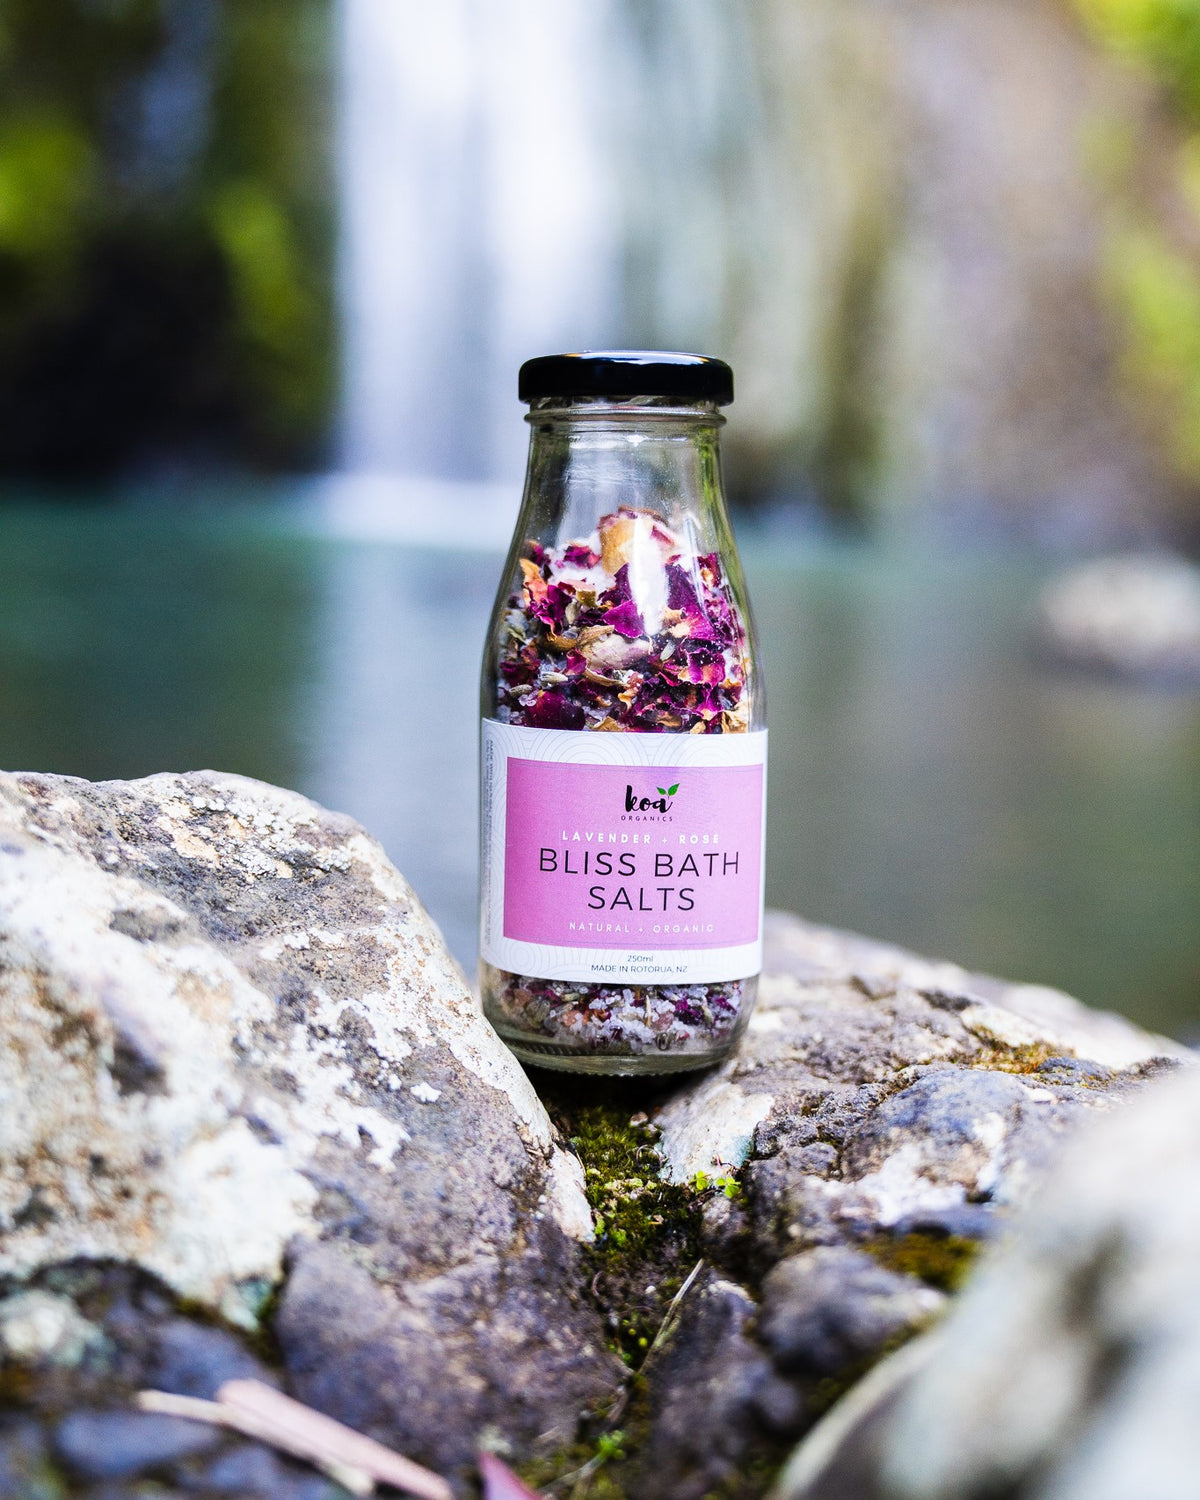 Bliss Bath Salts from Koa Organics